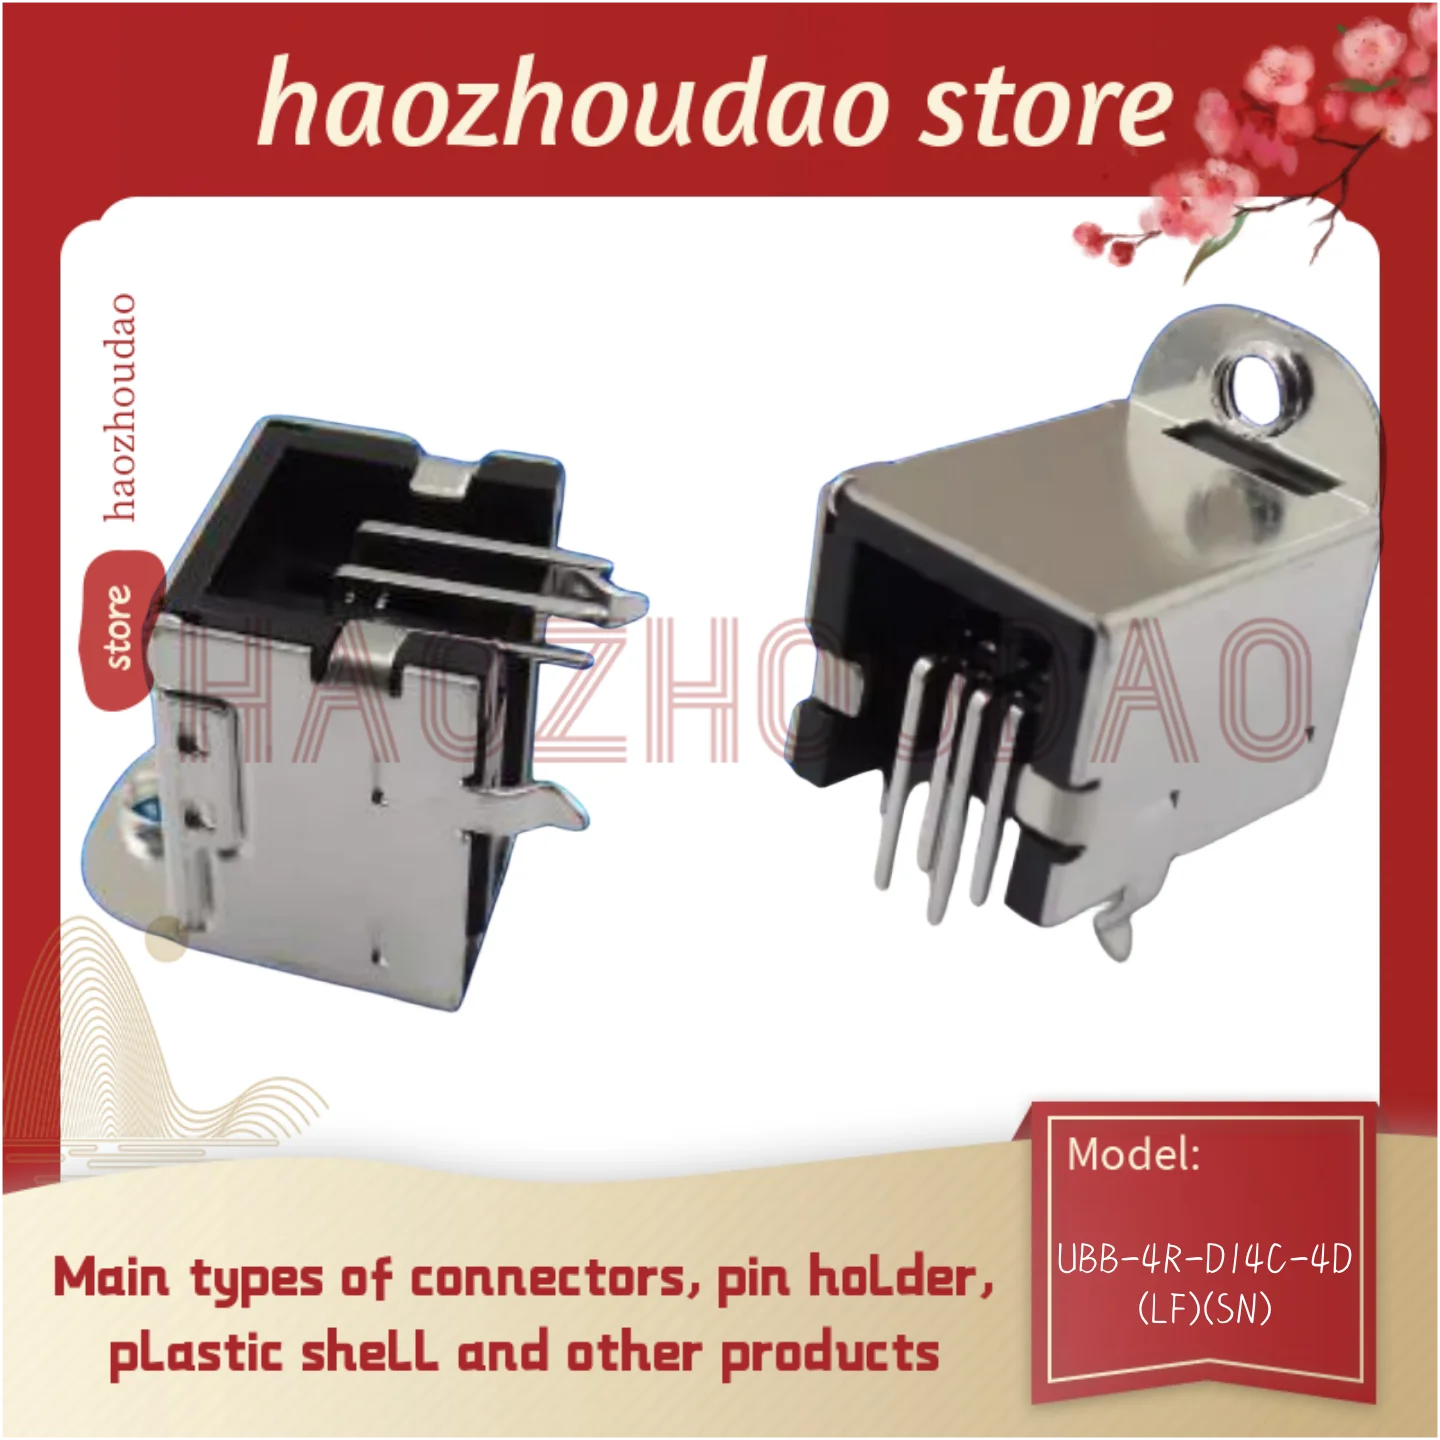 

20pcs Supply UBB-4R-D14C-4D(LF)(SN) connector pin holder